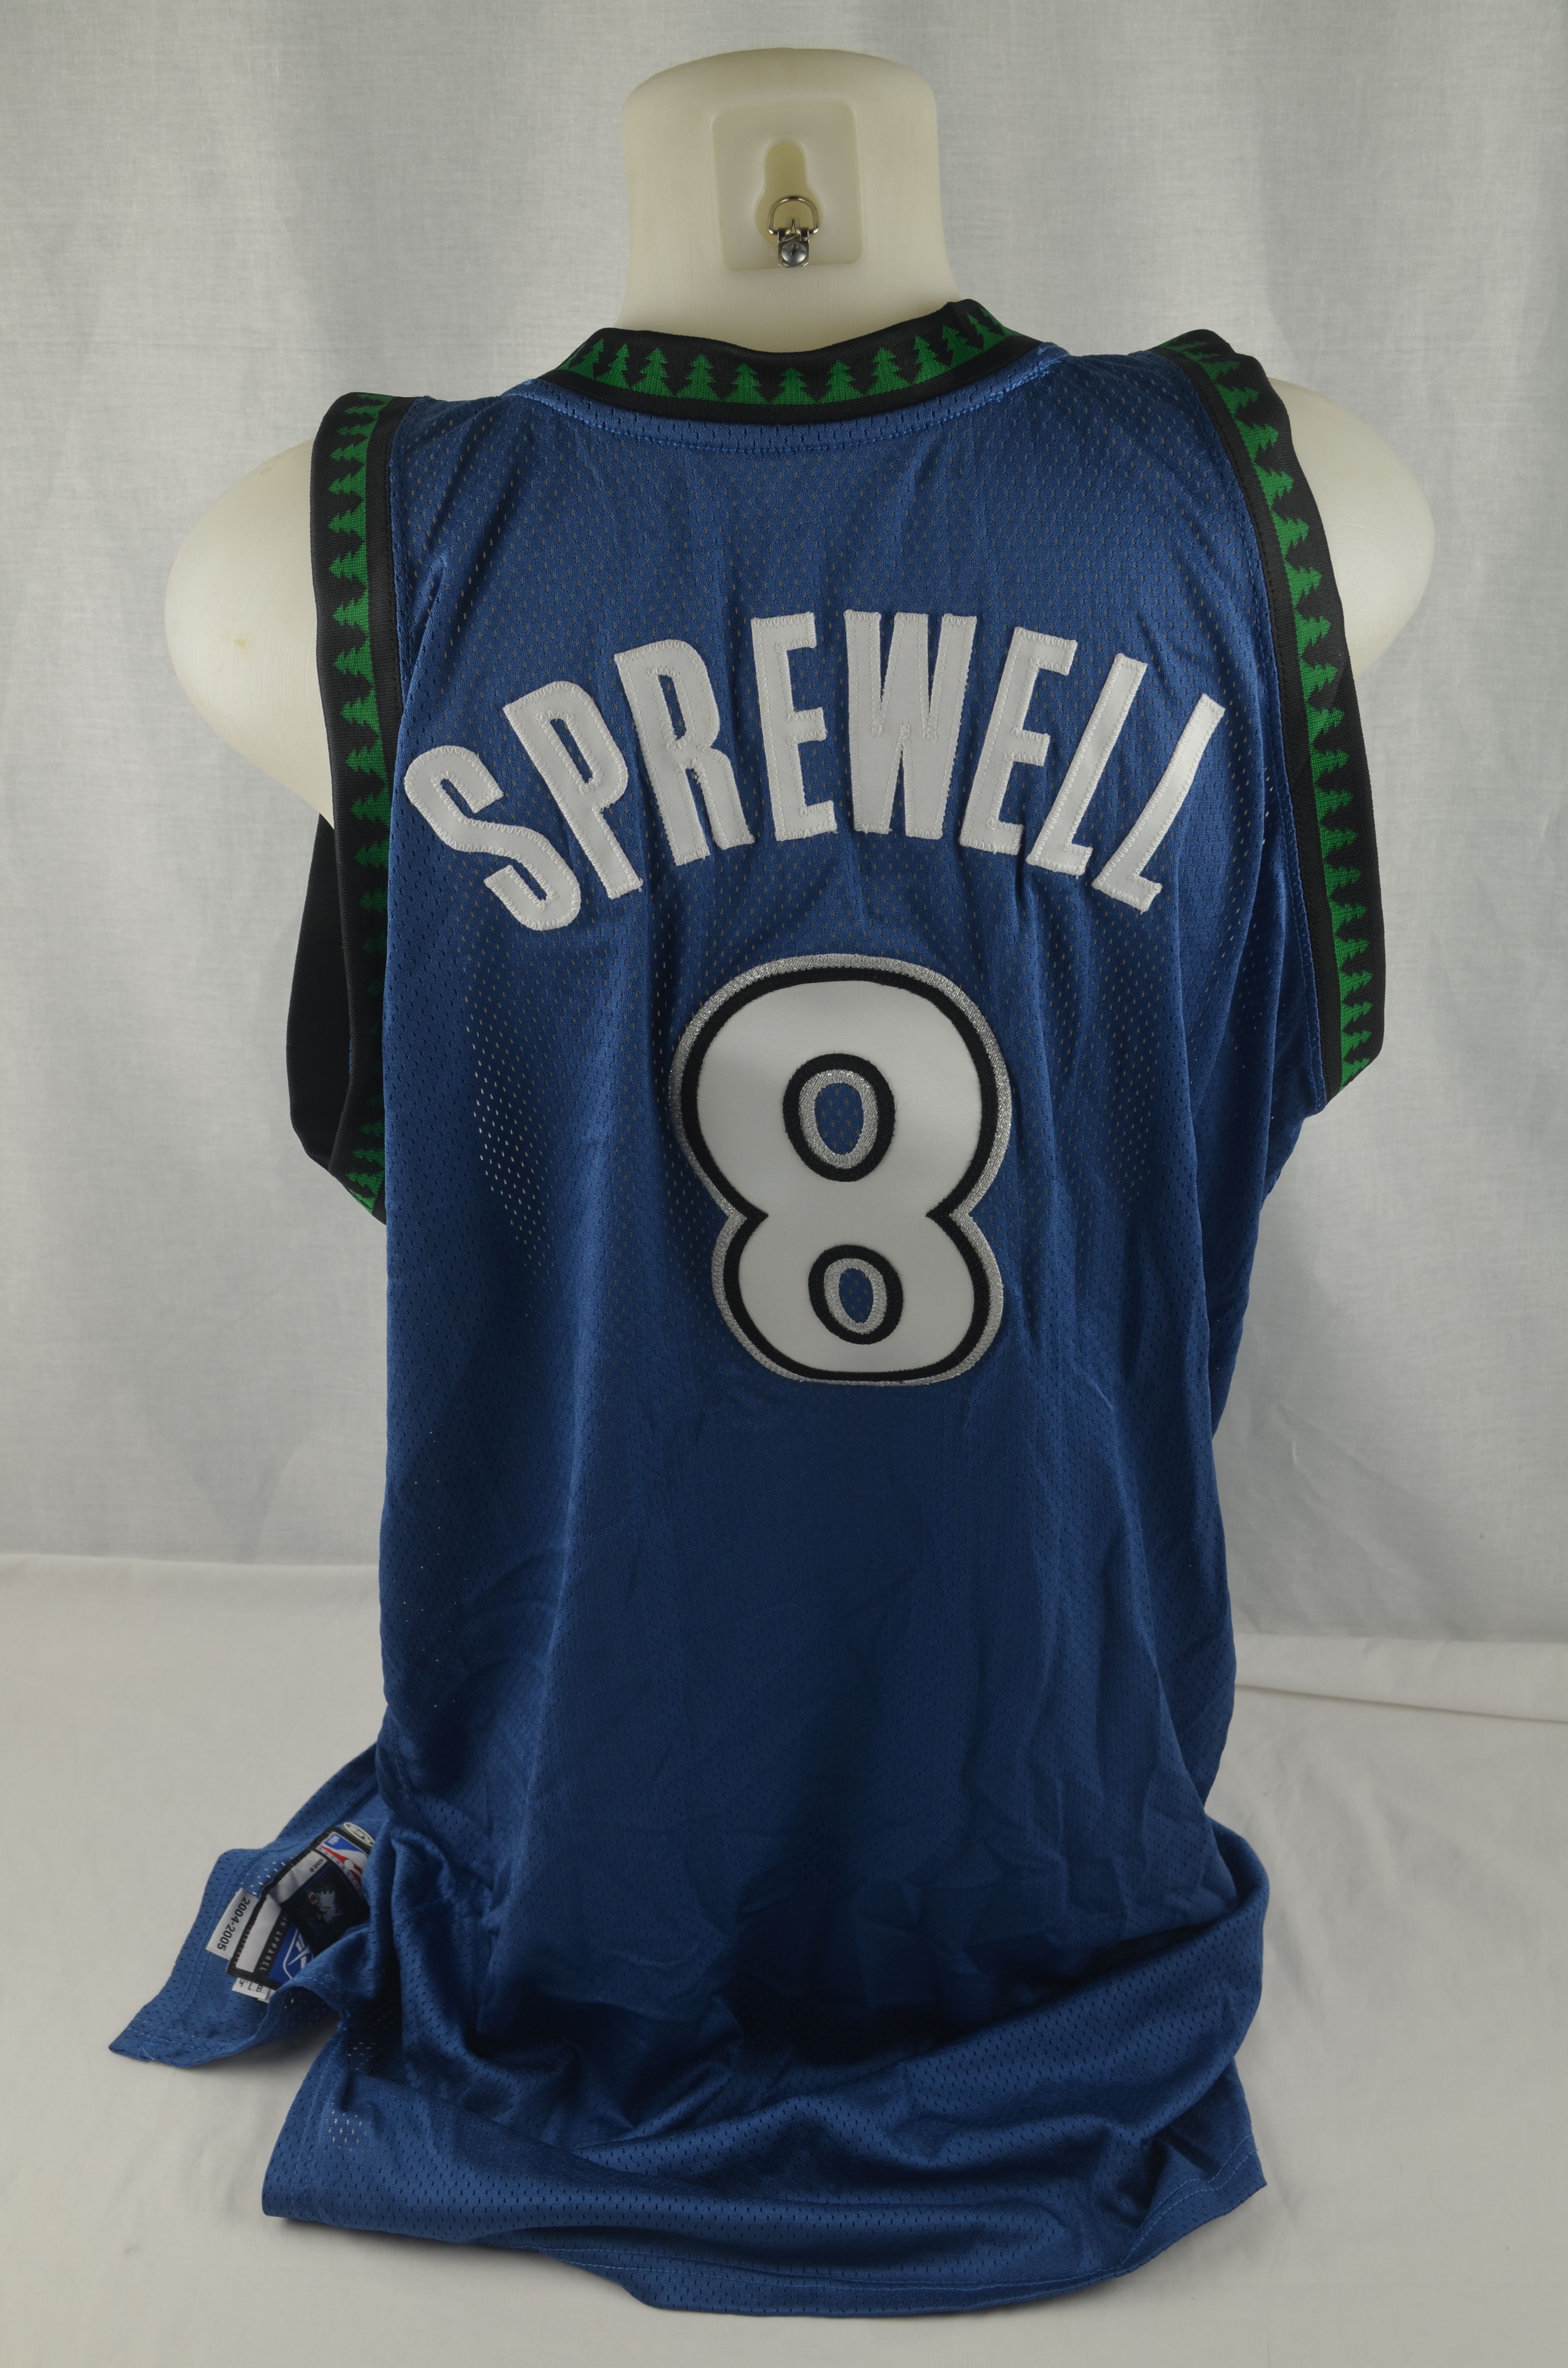 2004-05 Latrell Sprewell Game-Used Timberwolves Uniform - Memorabilia Expert